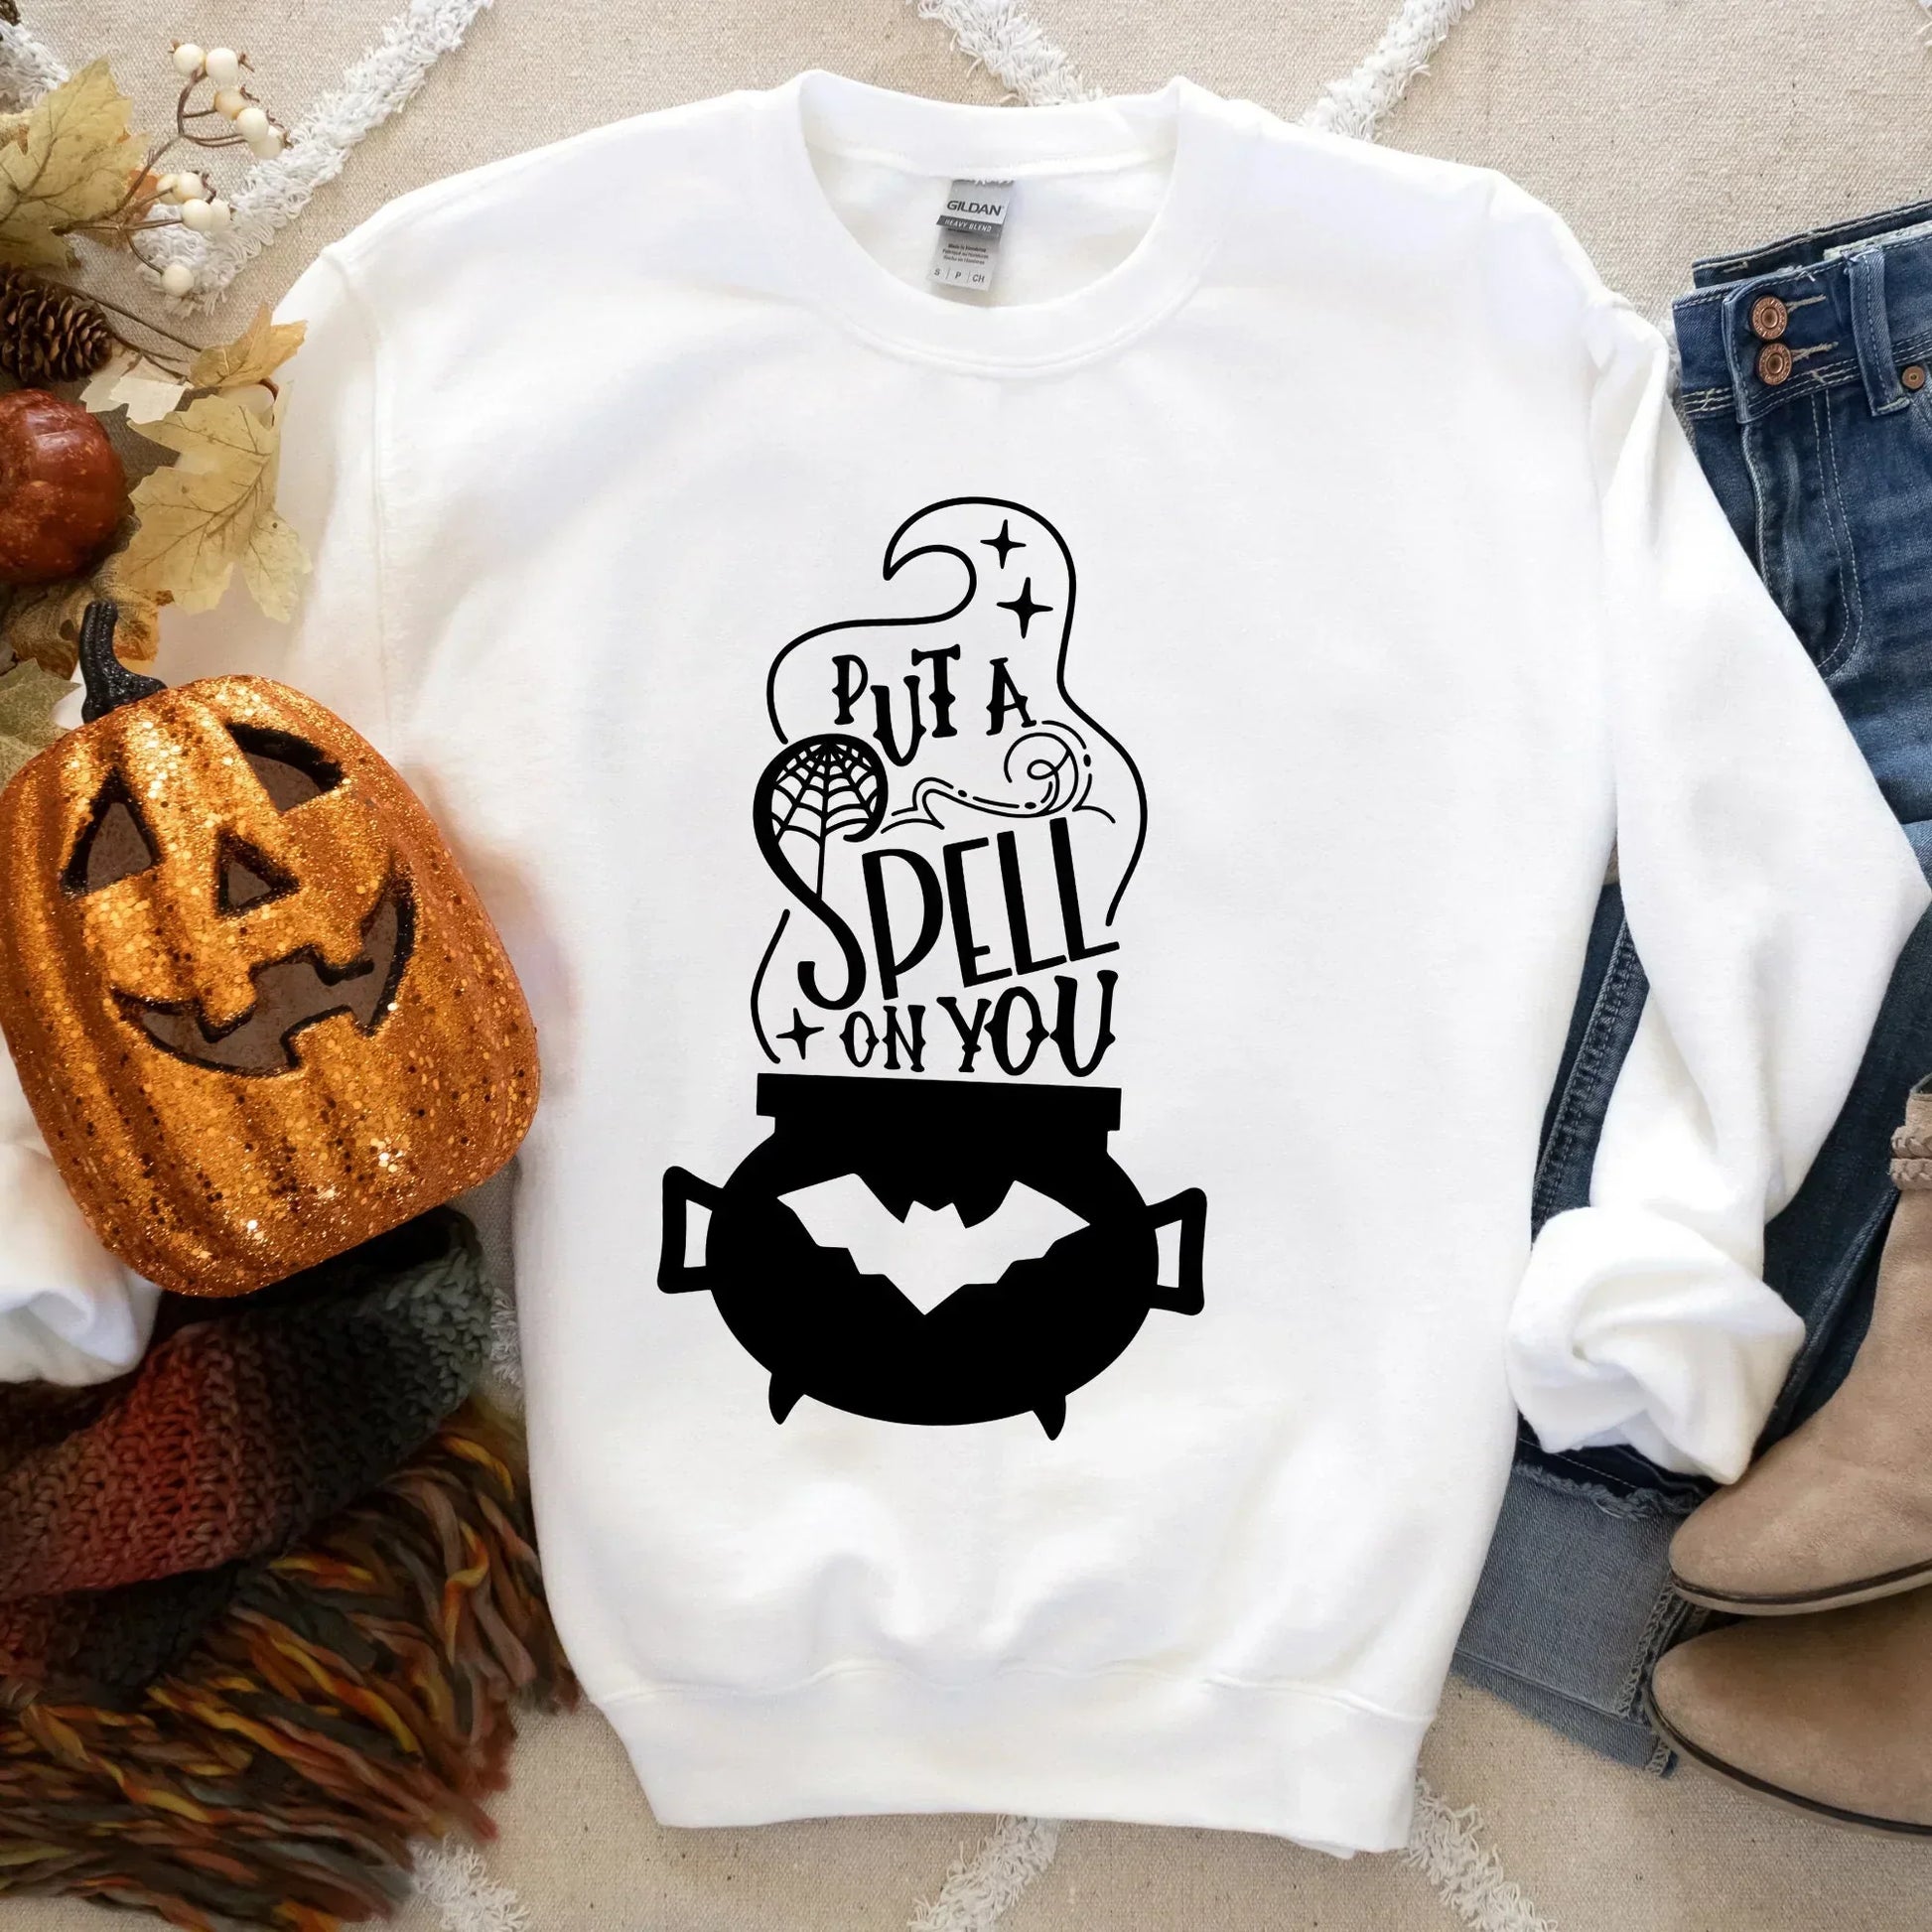 Put a Spell On You, Hocus Pocus Shirt, Halloween Sweater, Halloween Crewneck, Halloween Party, Horror Shirt, Funny Halloween, Horror Movie